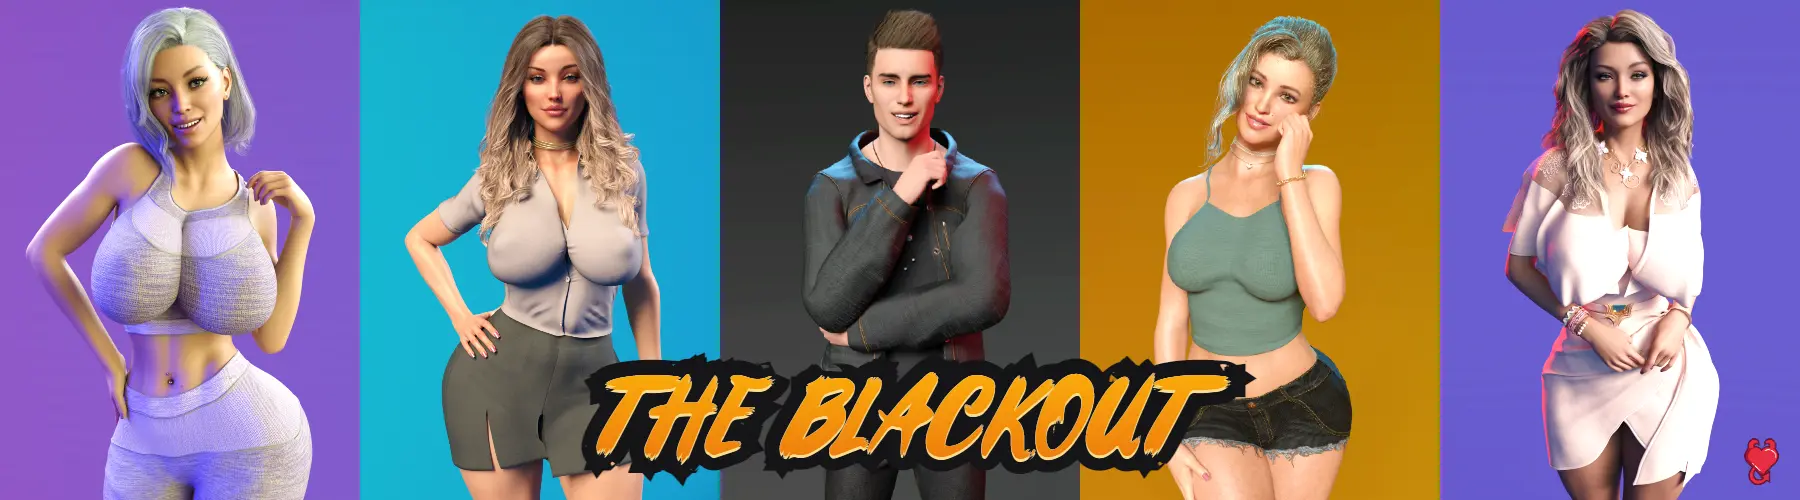 The Blackout [v0.02] main image